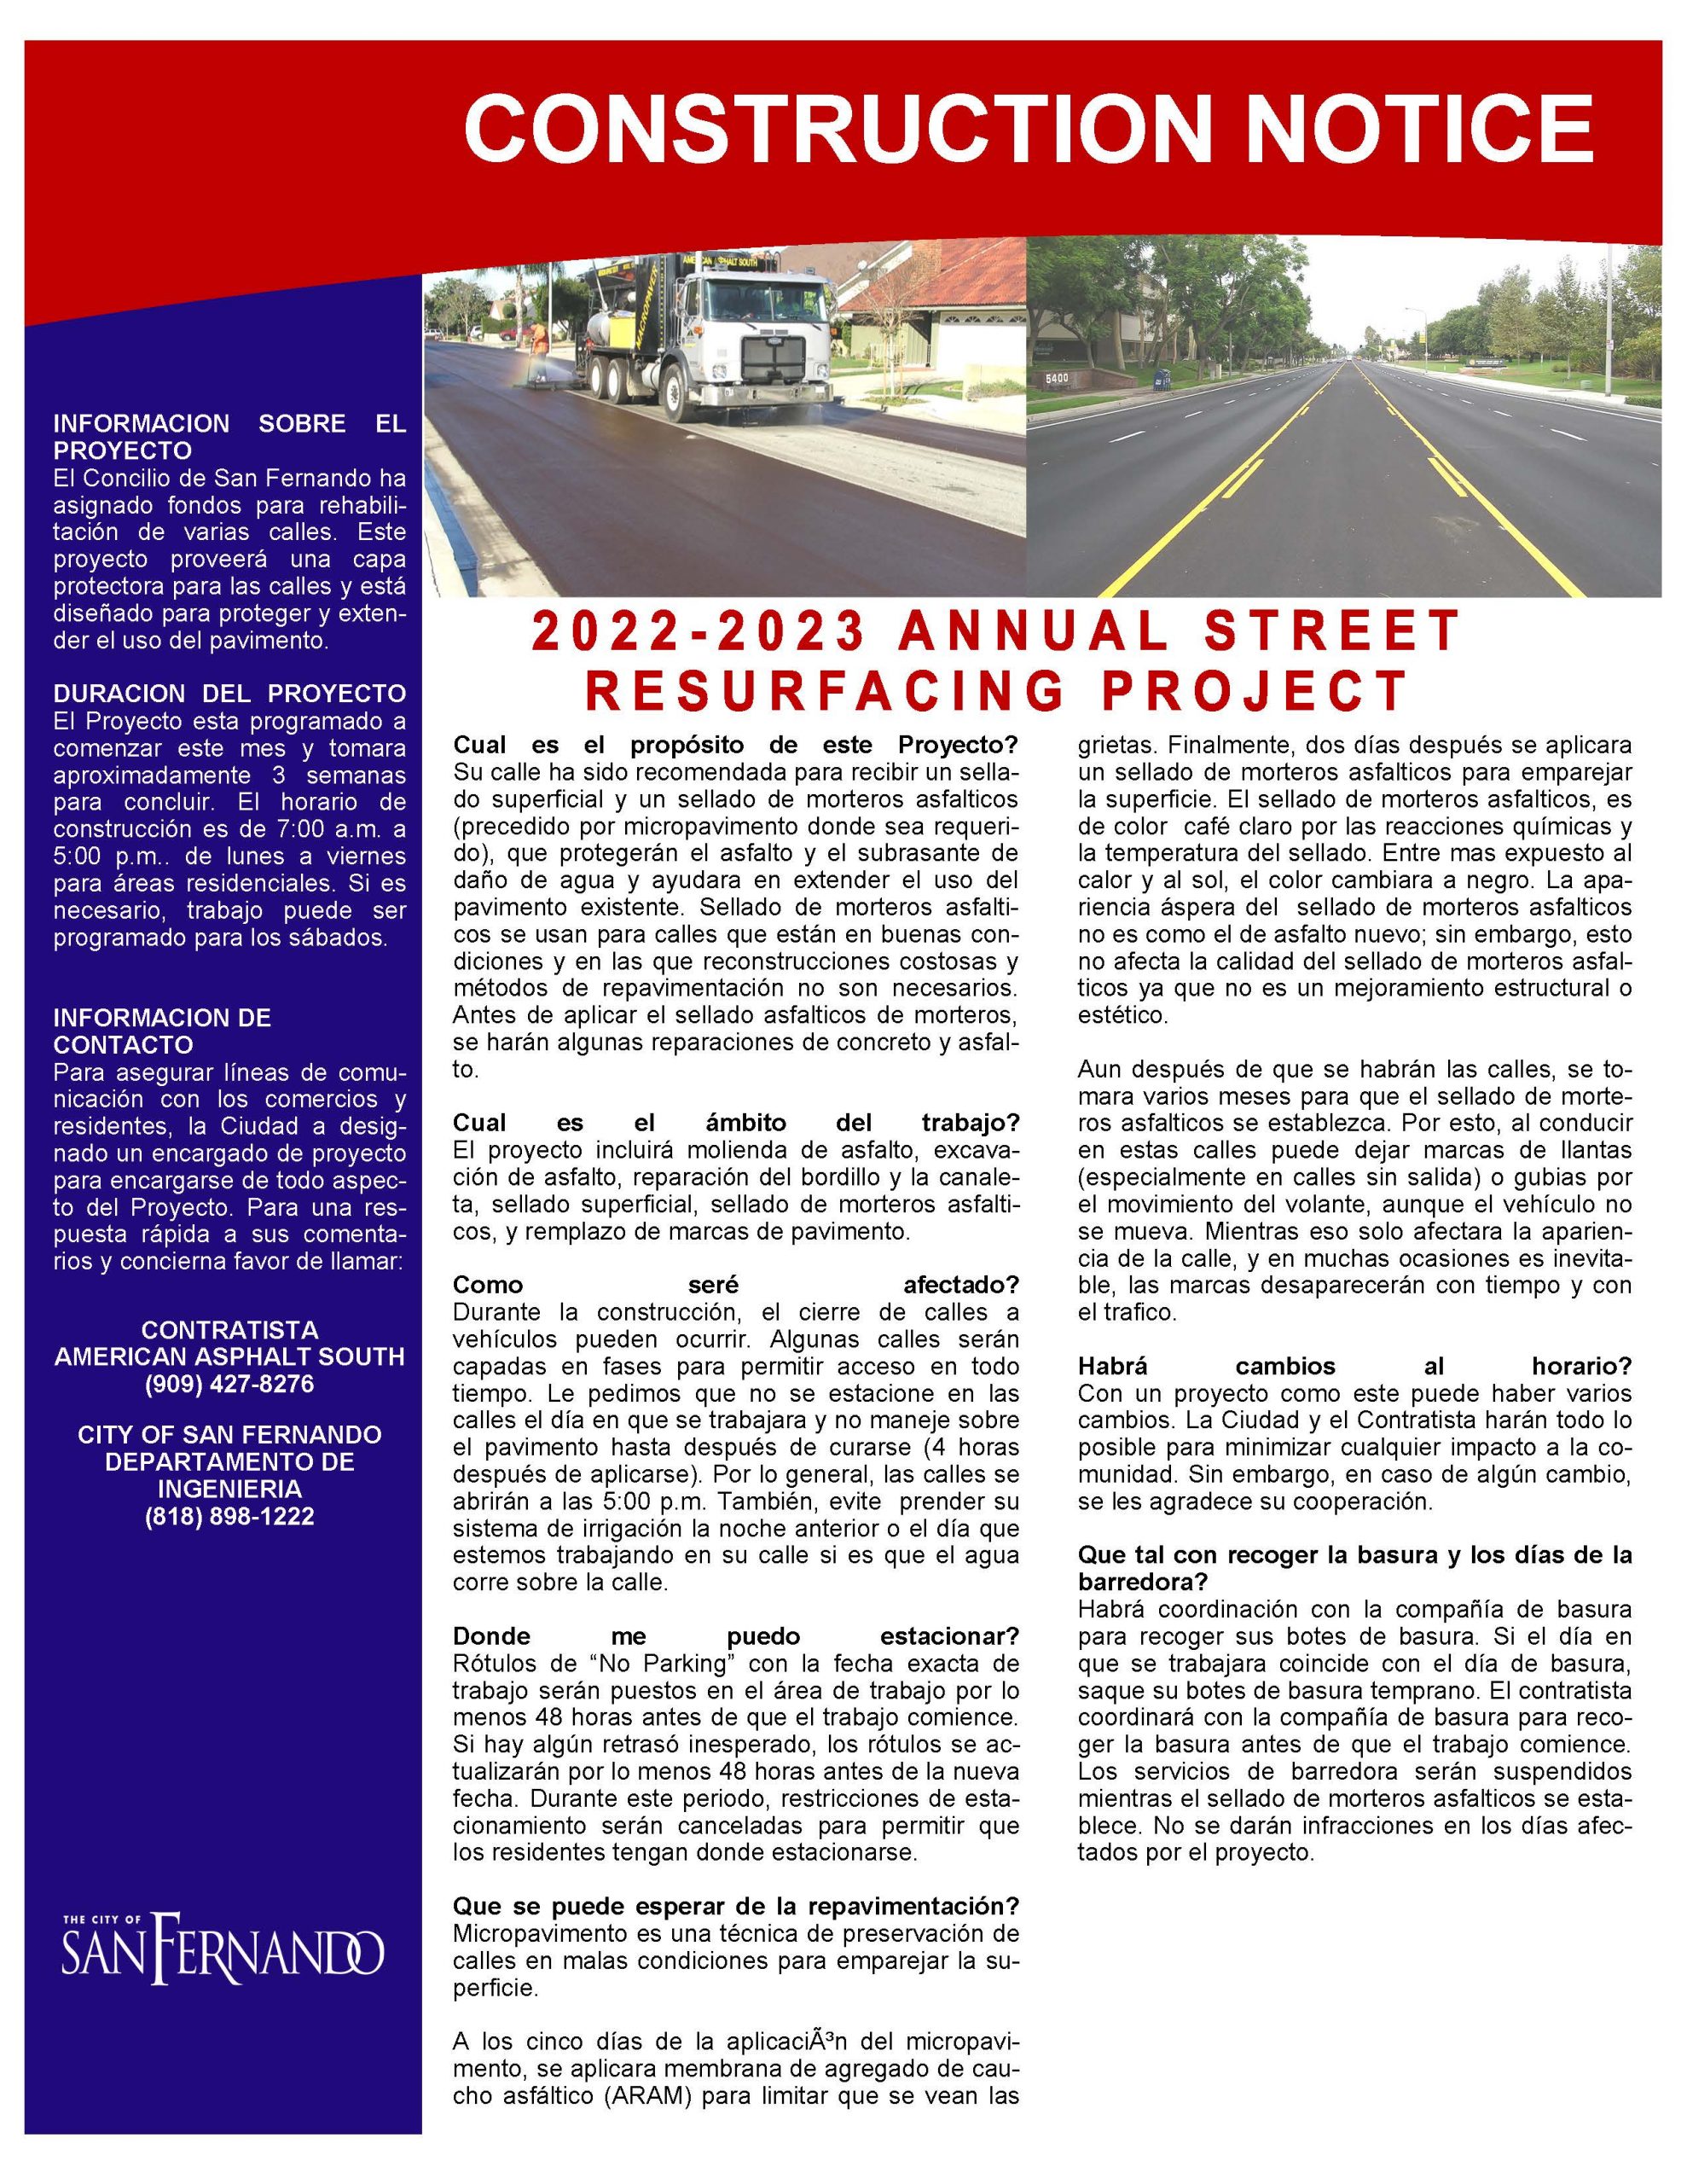 Phase 2 Annual Street Resurfacing Notice_Spanish